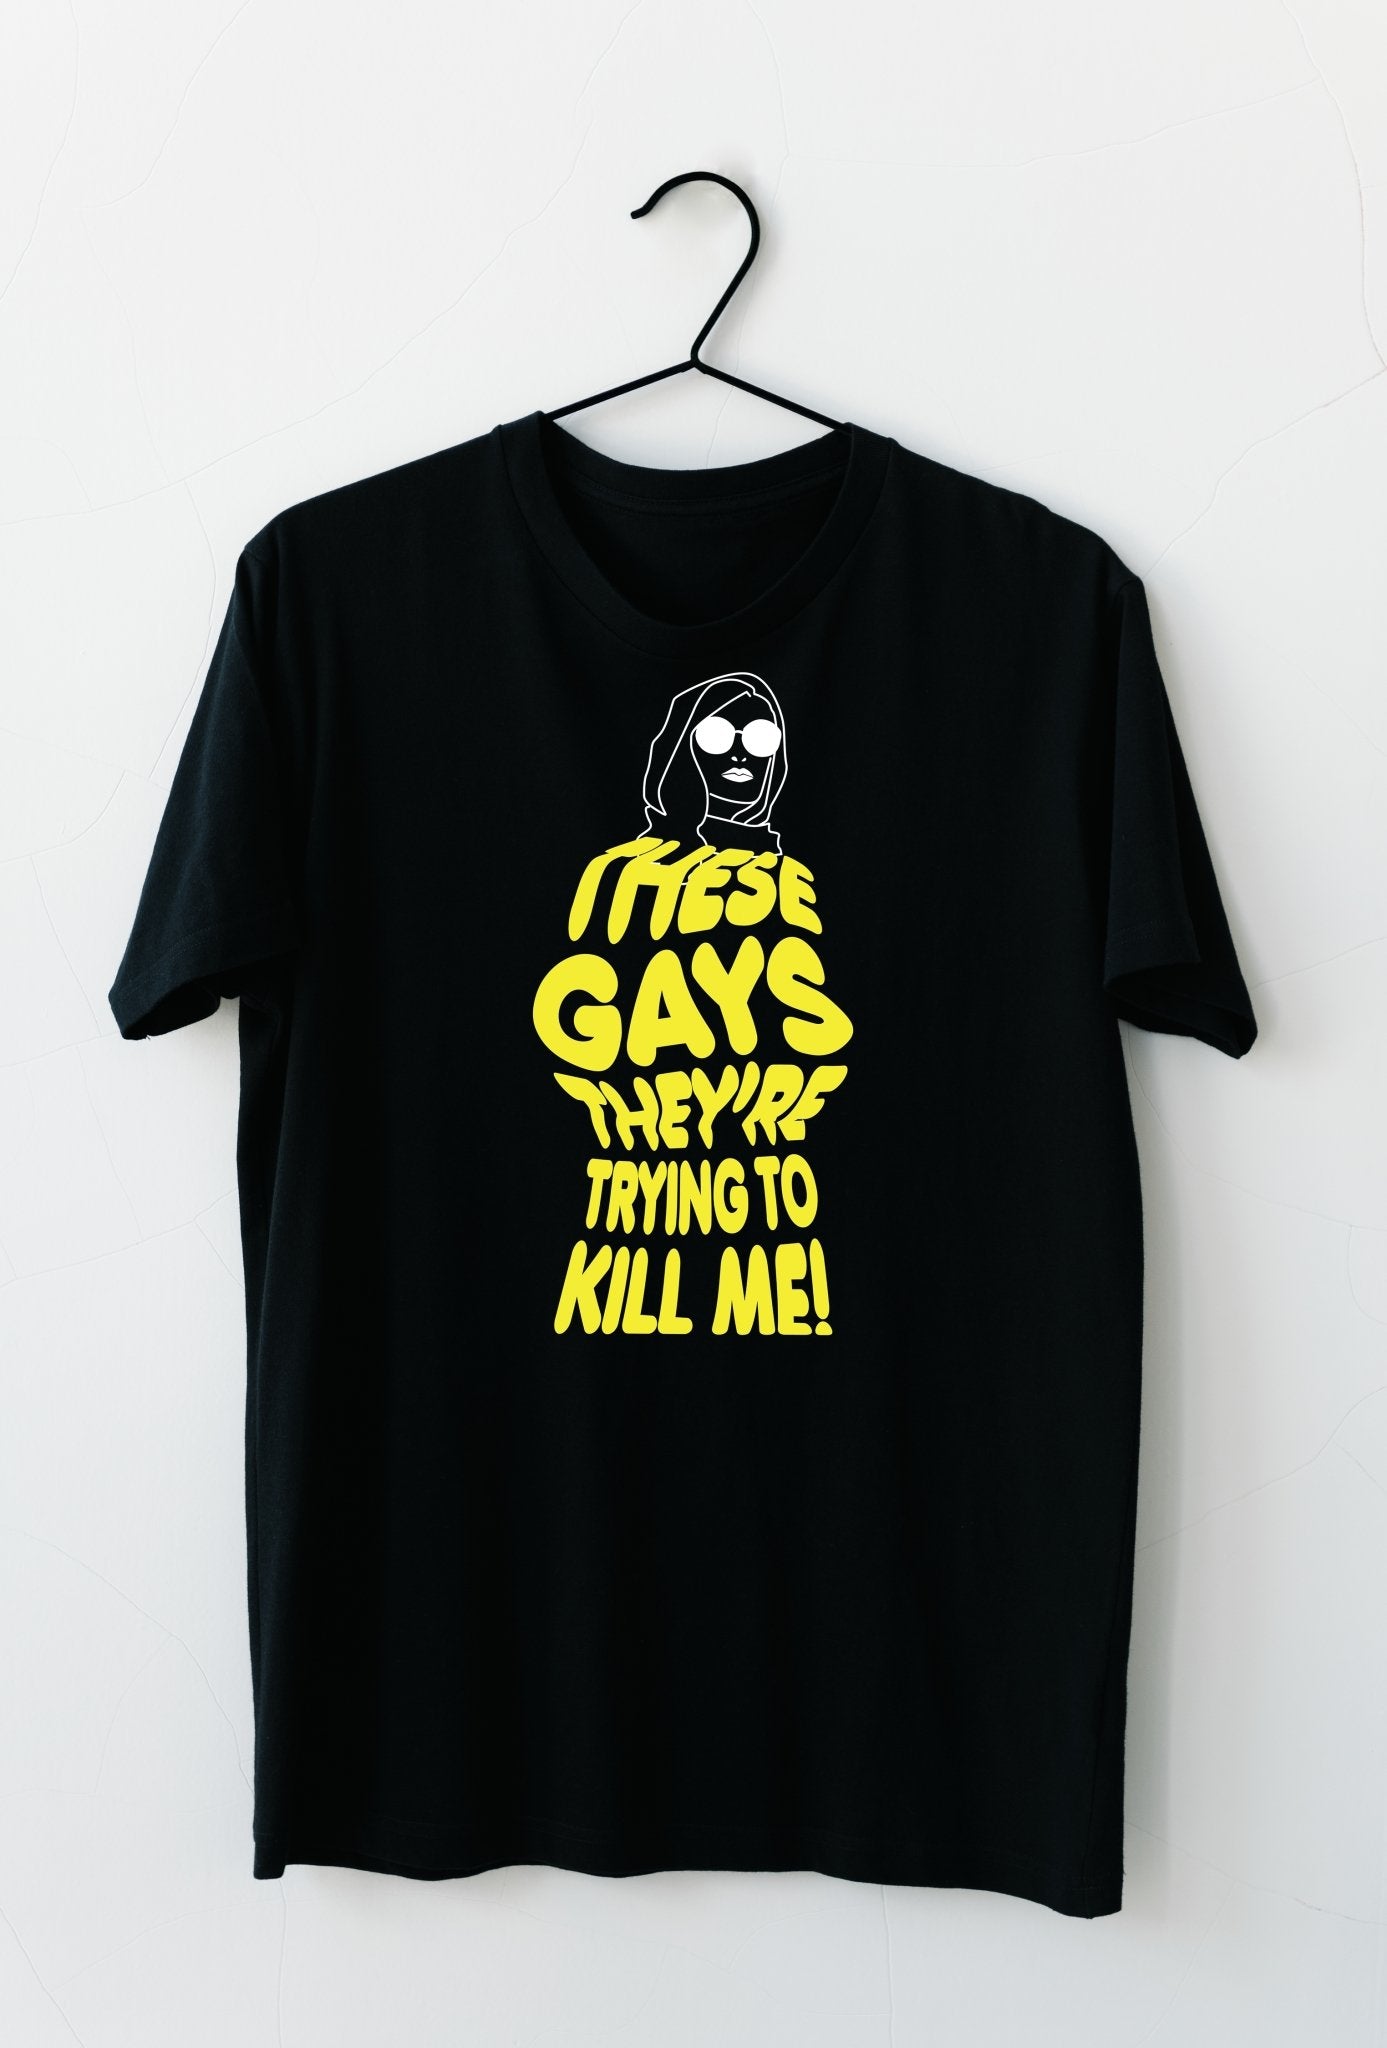 These Gays They're Trying to Kill Me! Graphic Shirt - TB-BondMenShirt